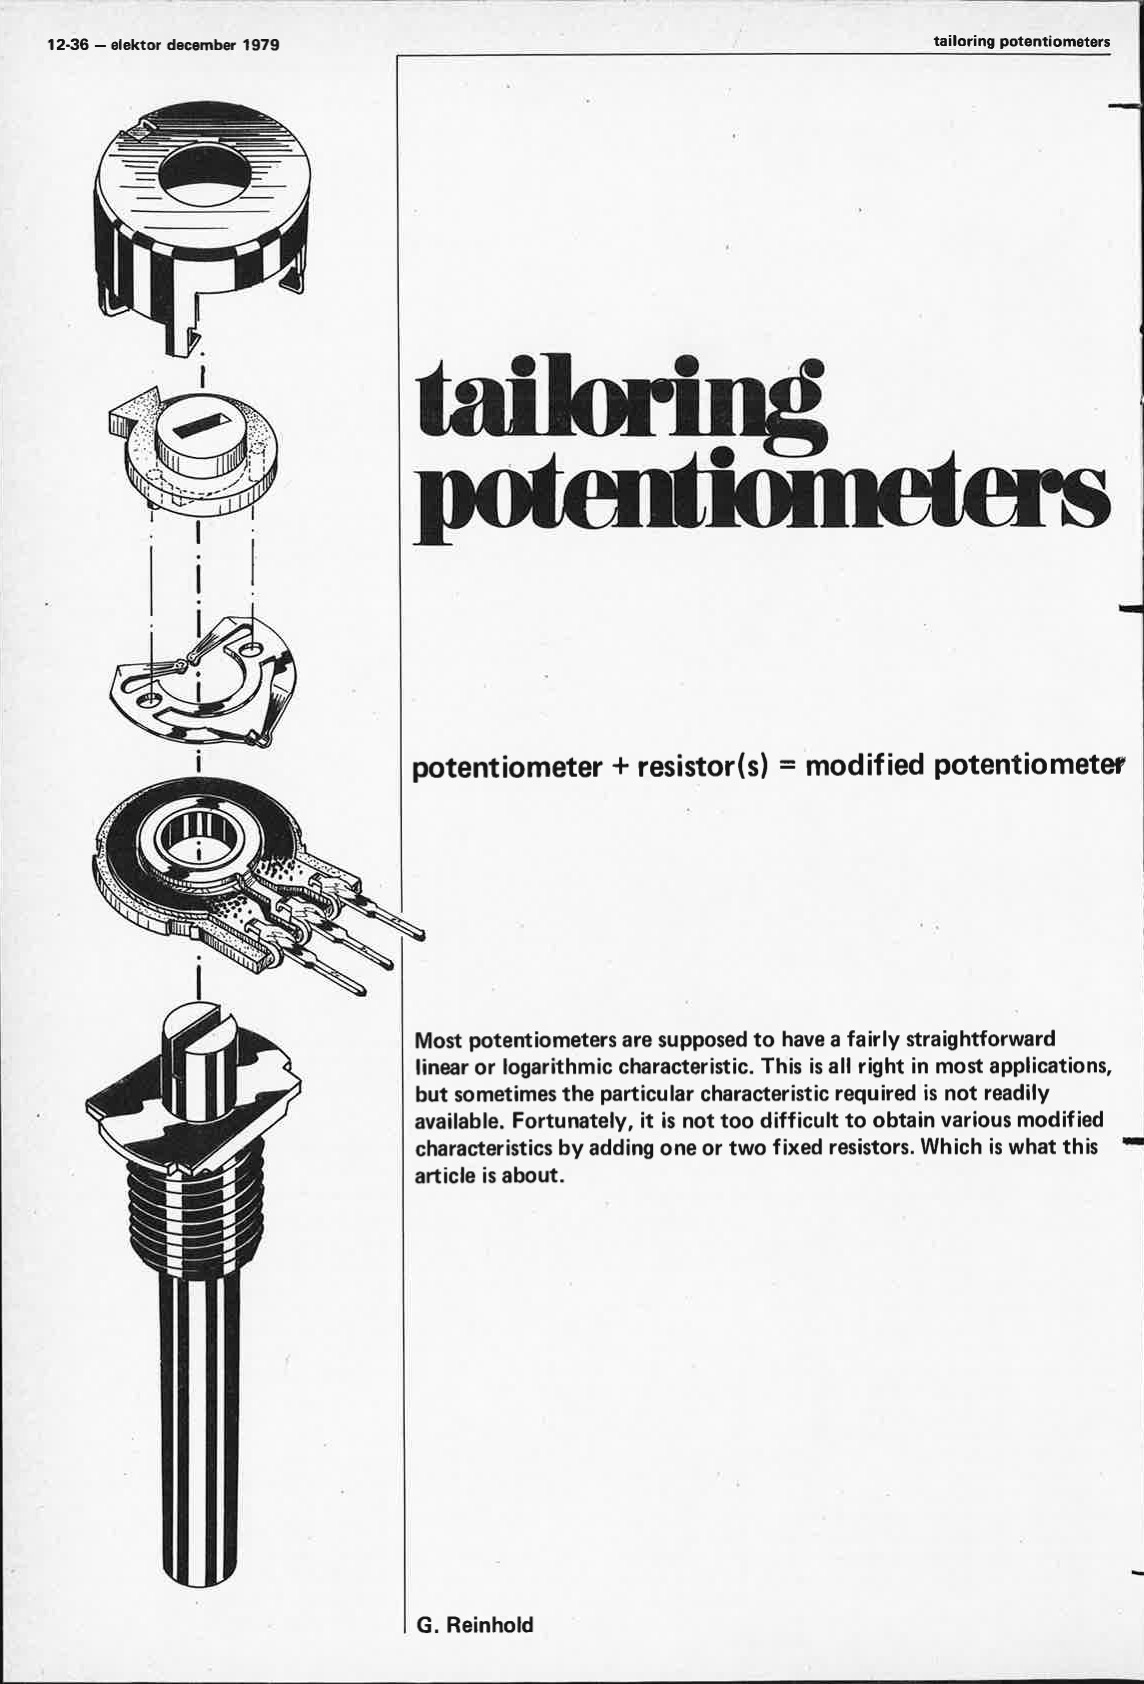 tailoring potentiometers